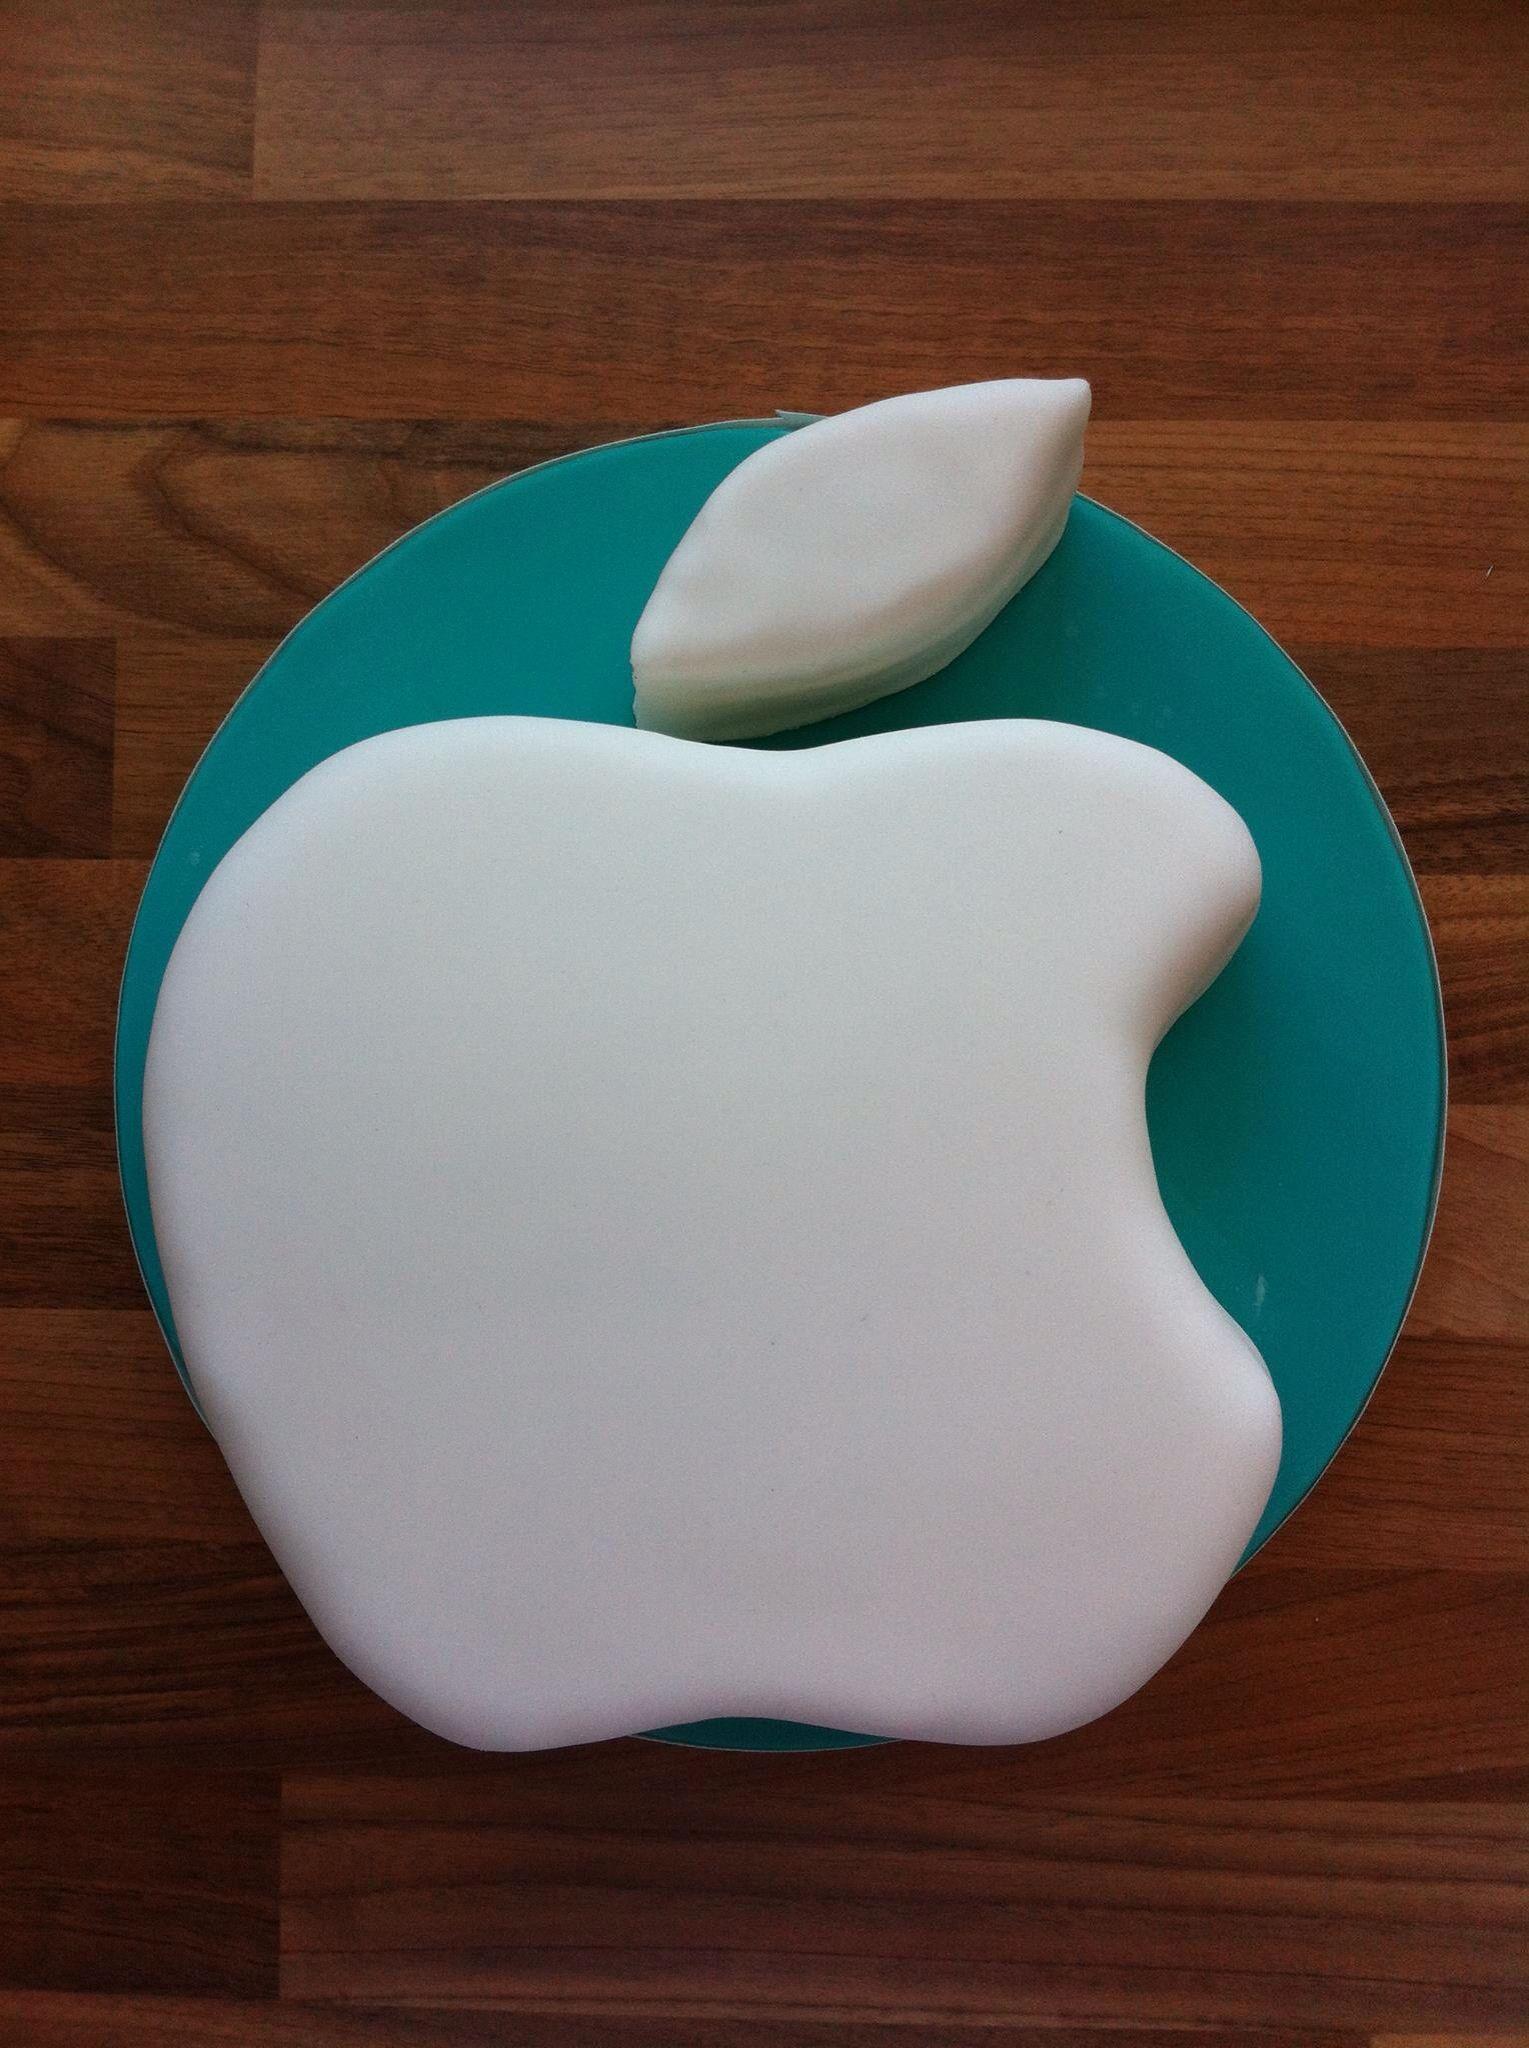 Round Apple Logo - Apple Logo Cake for my Apple mad husbands 30th birthday. Hand